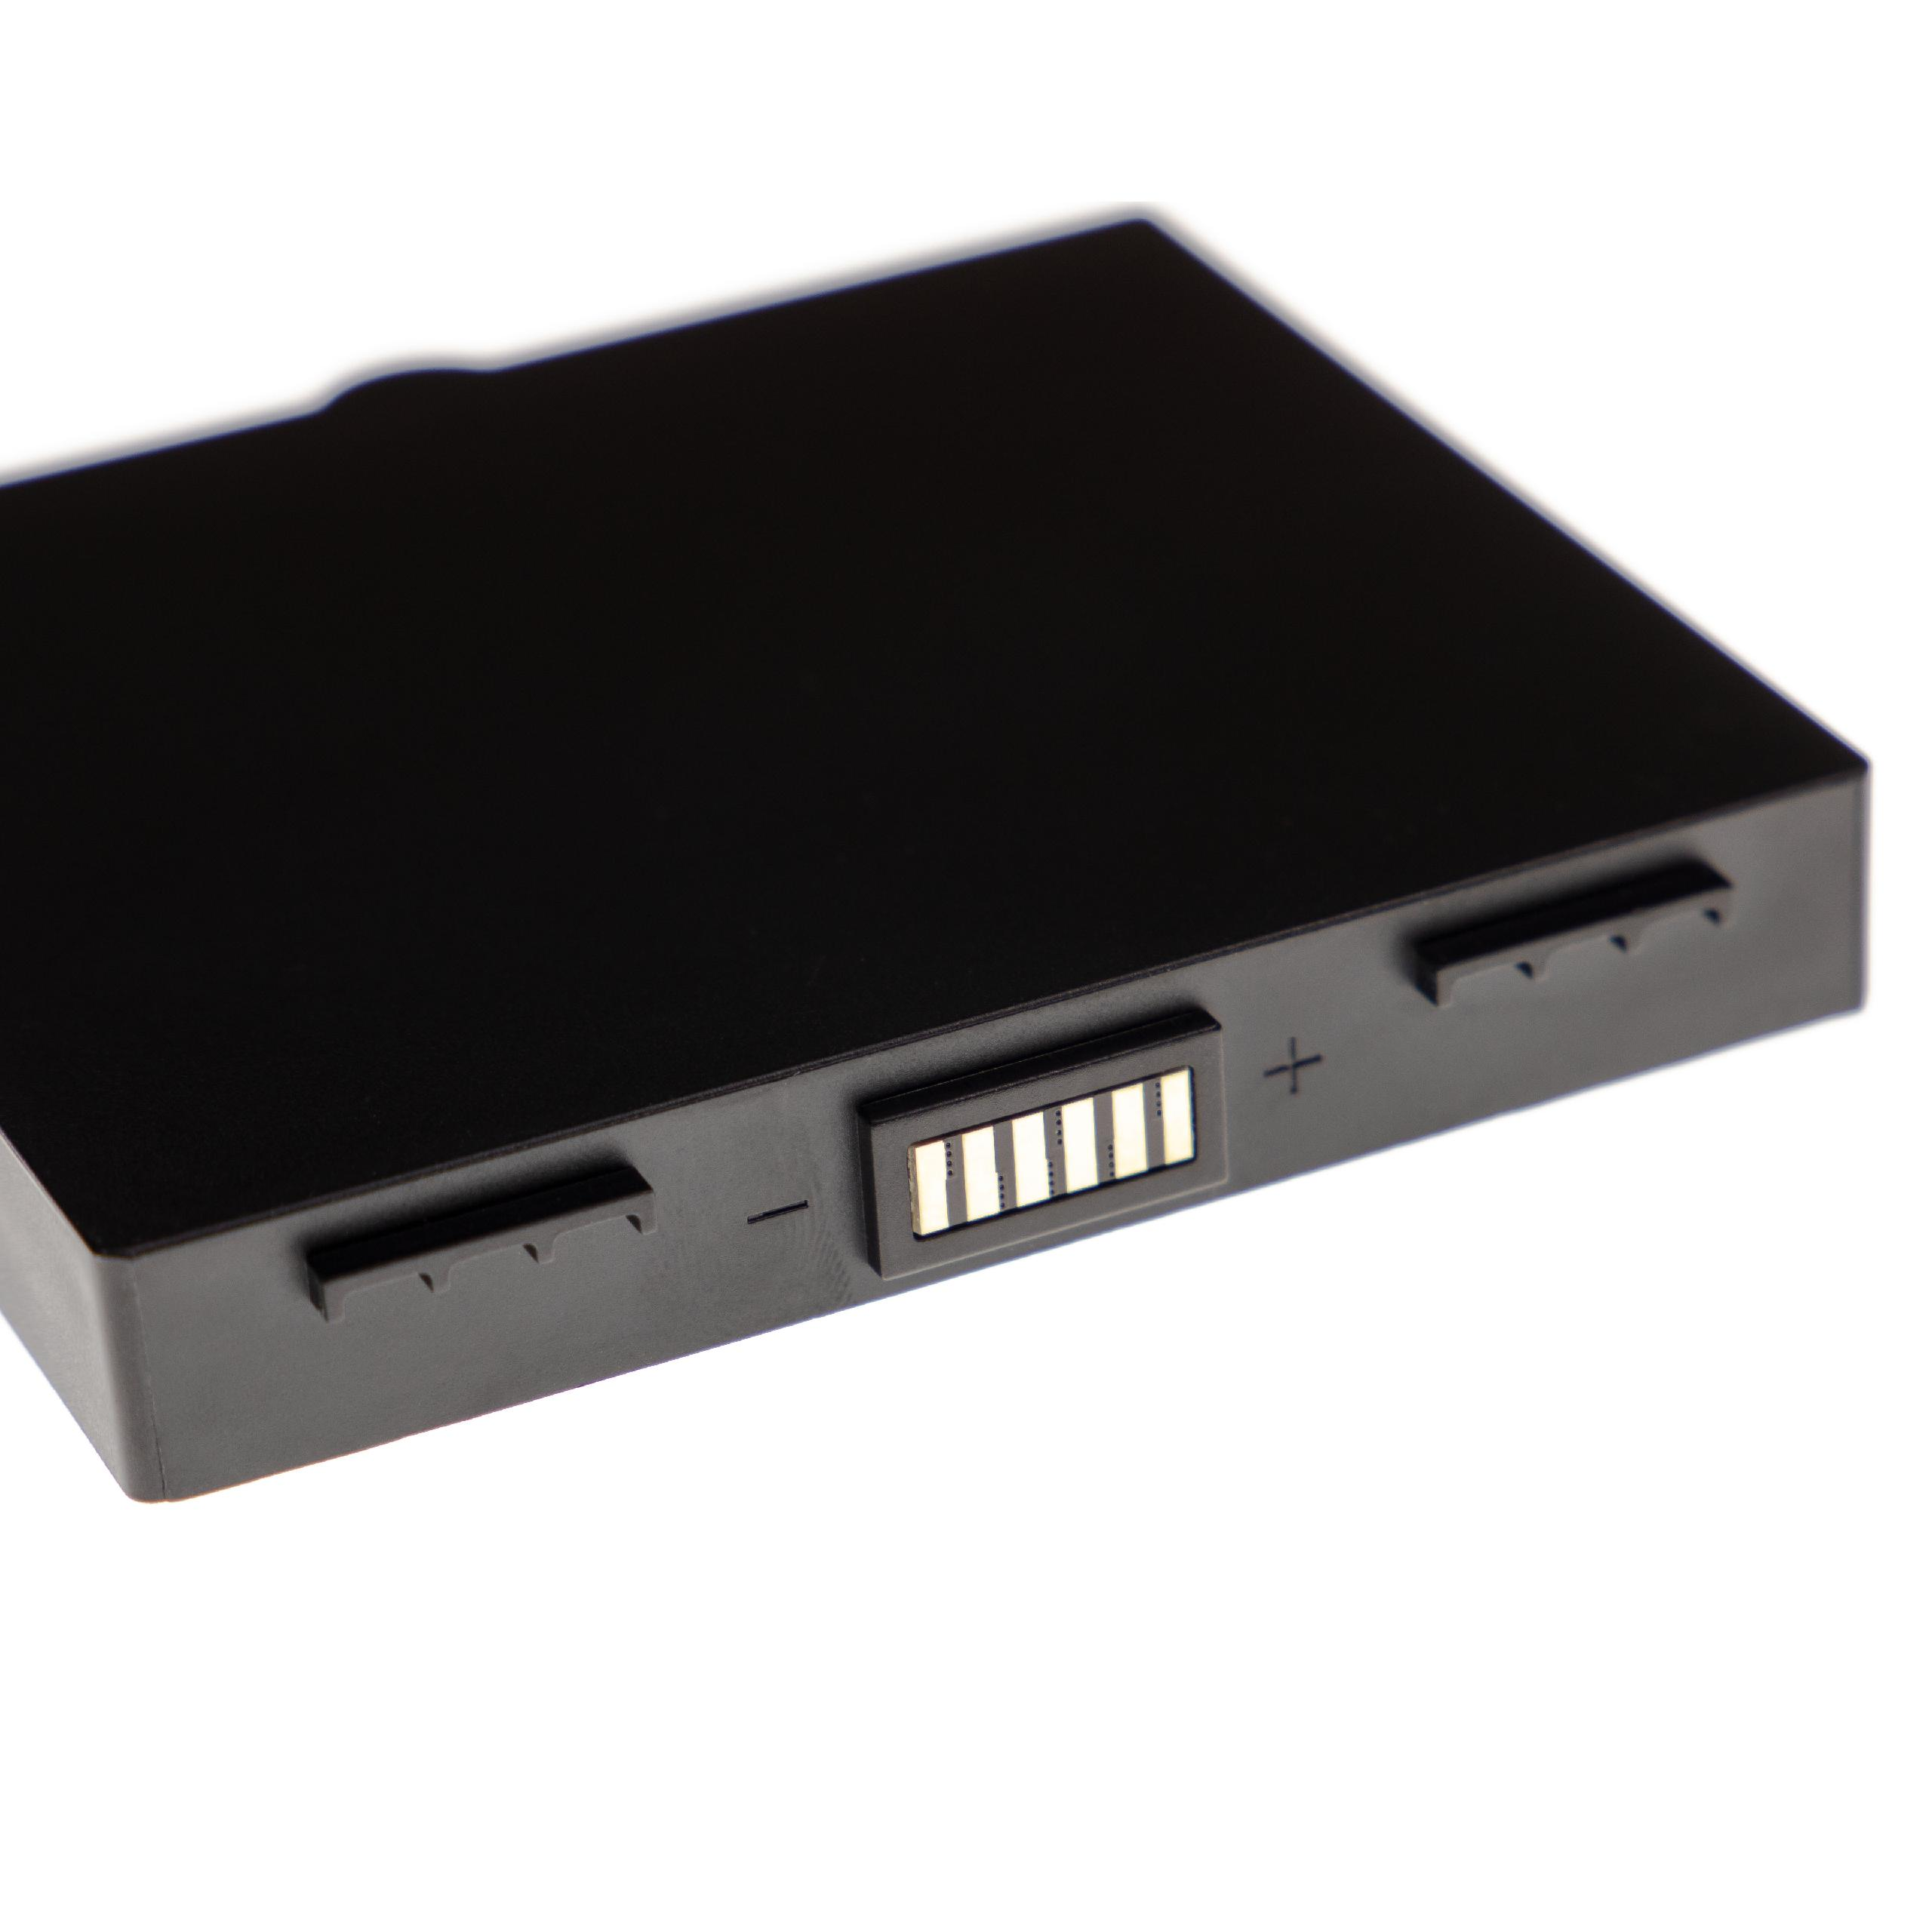 7.4 kompatibel Li-Polymer Stratus 4850 mit Akku Reader Lautsprecher, VHBW Victor HumanWare Volt, -